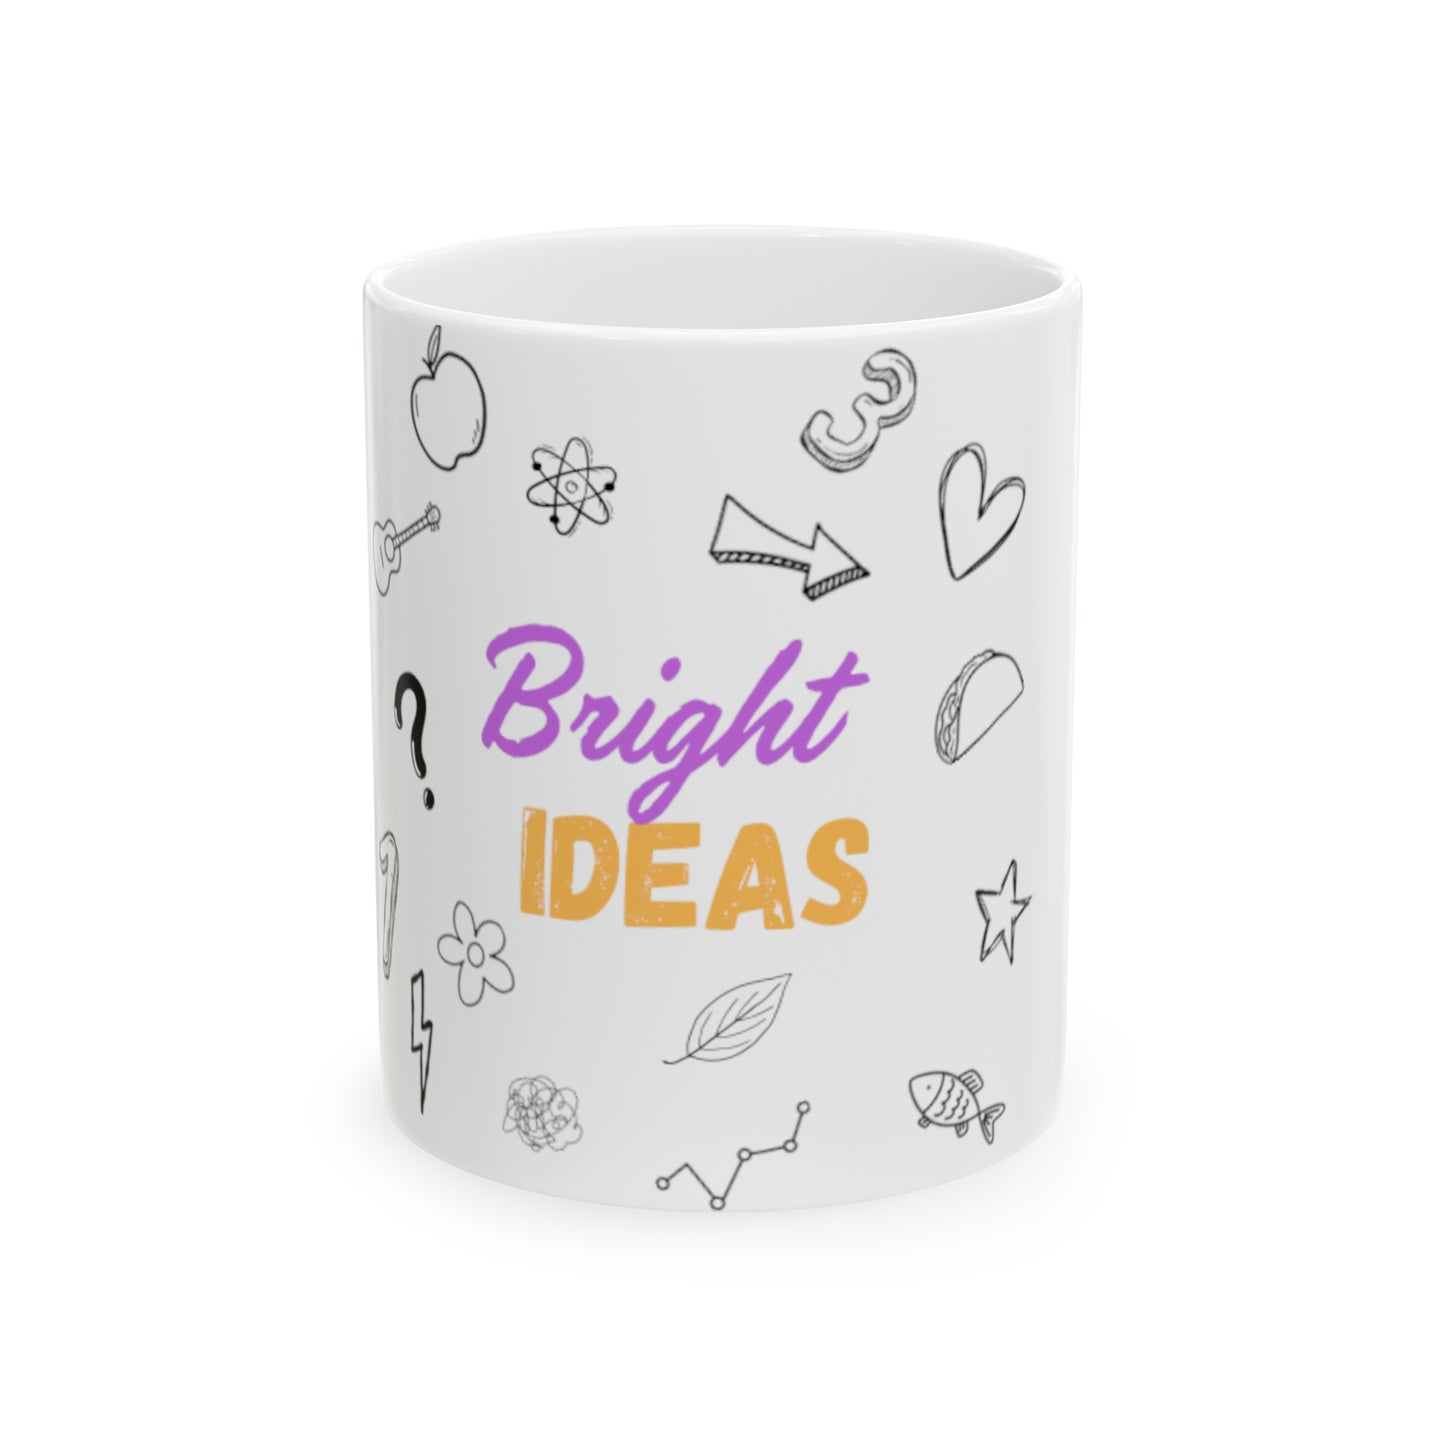 Bright Ideas Ceramic Mug